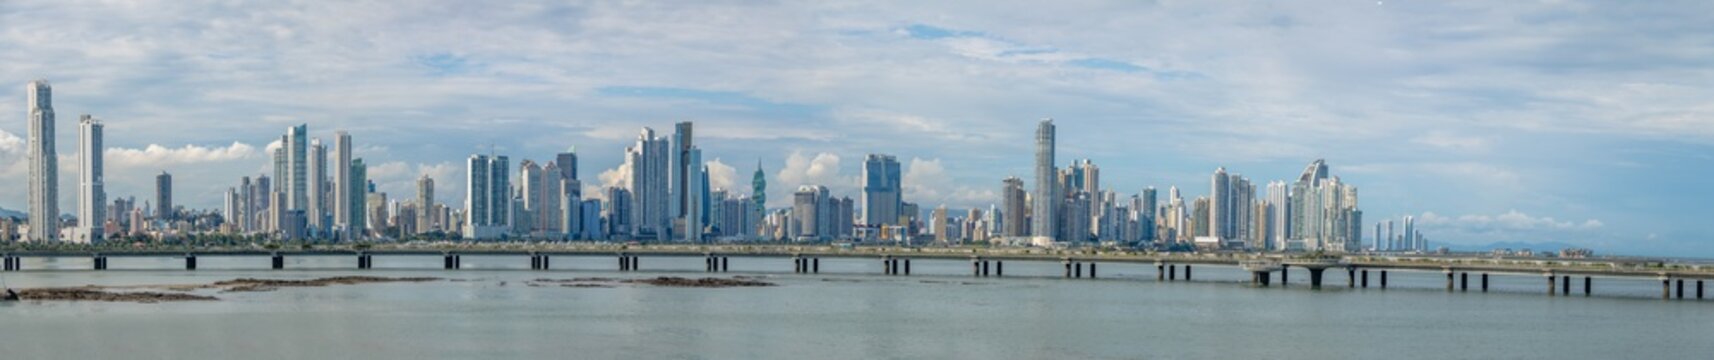 Panoramic view of Panama City skyline with skyscrapers and Cinta Costera (Coastal Beltway) - Panama City, Panama